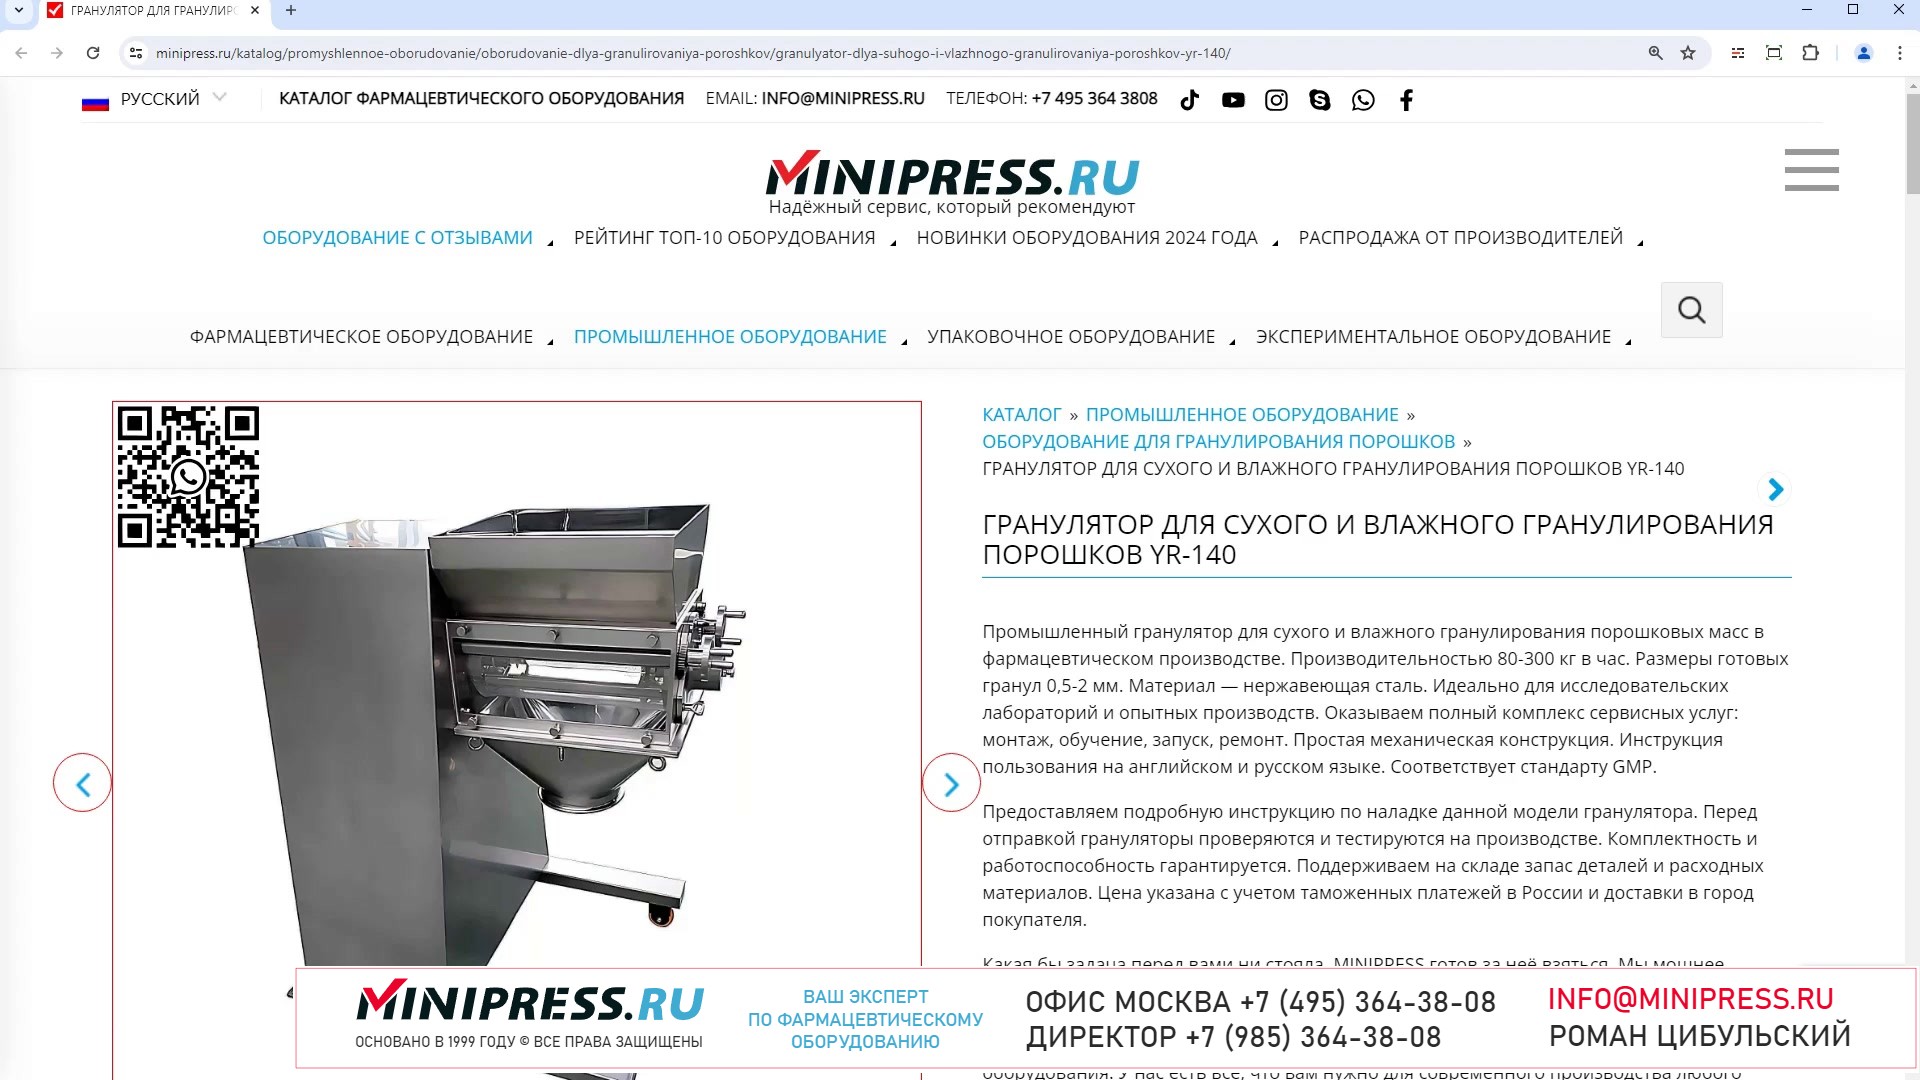 Minipress.ru Гранулятор для сухого и влажного гранулирования порошков YR-140